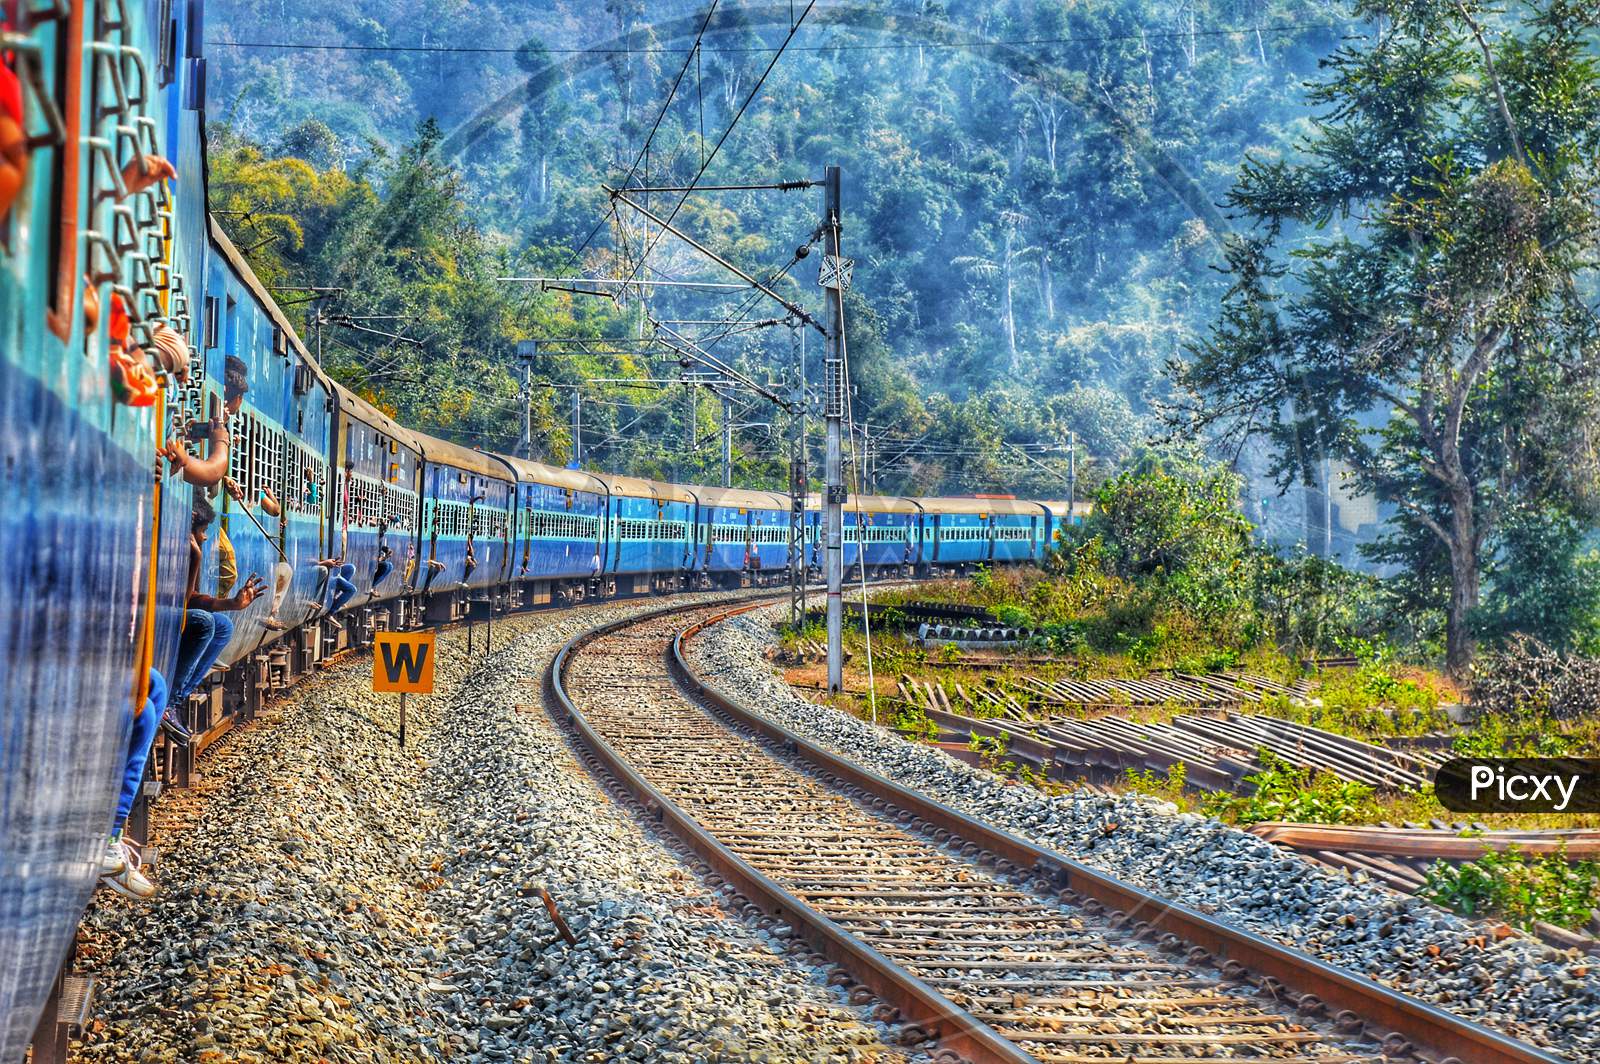 Train Journey